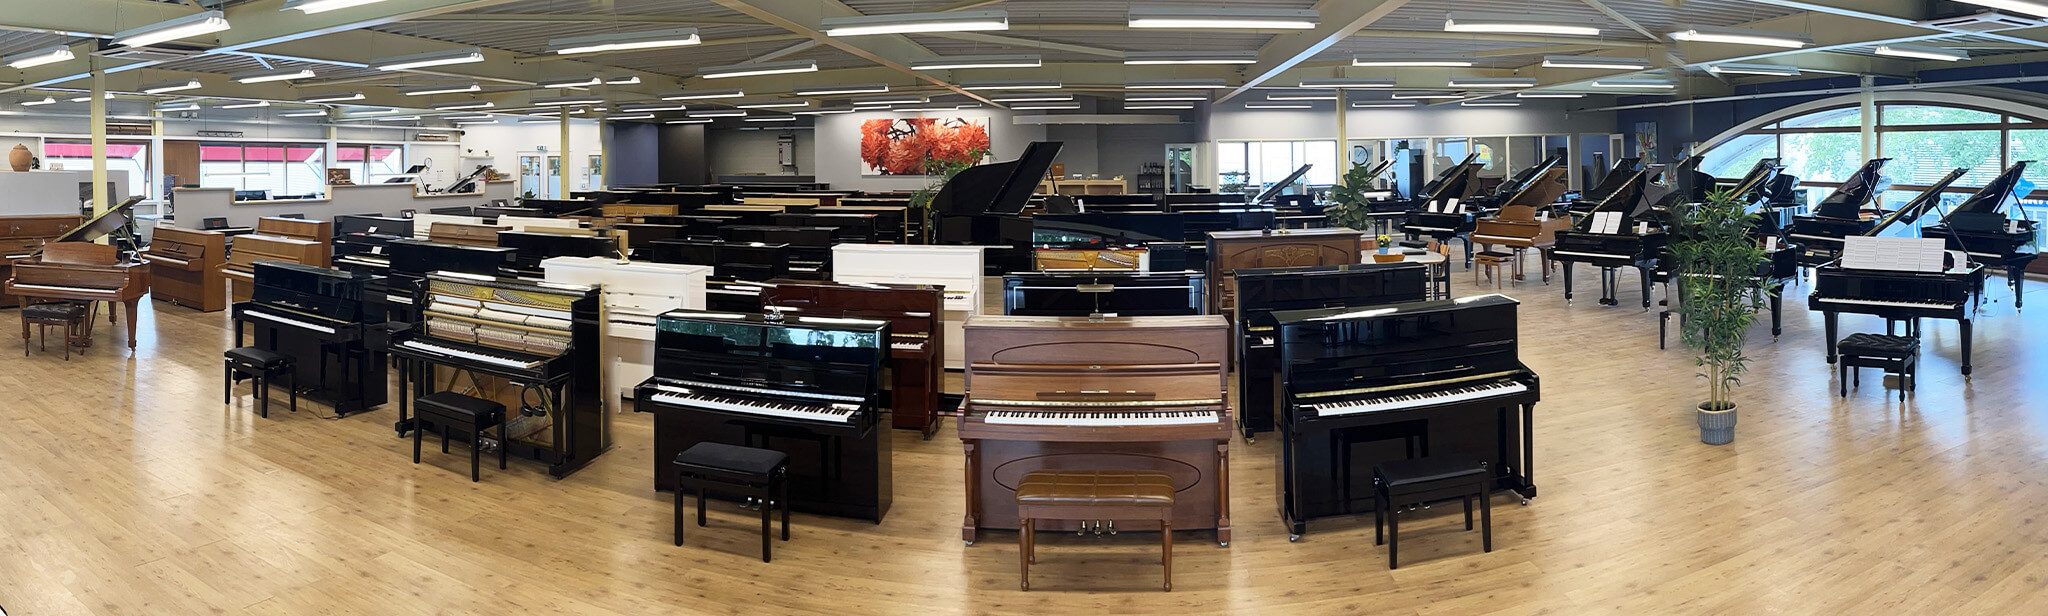 Piano kopen Breda | Acustica piano's & vleugels